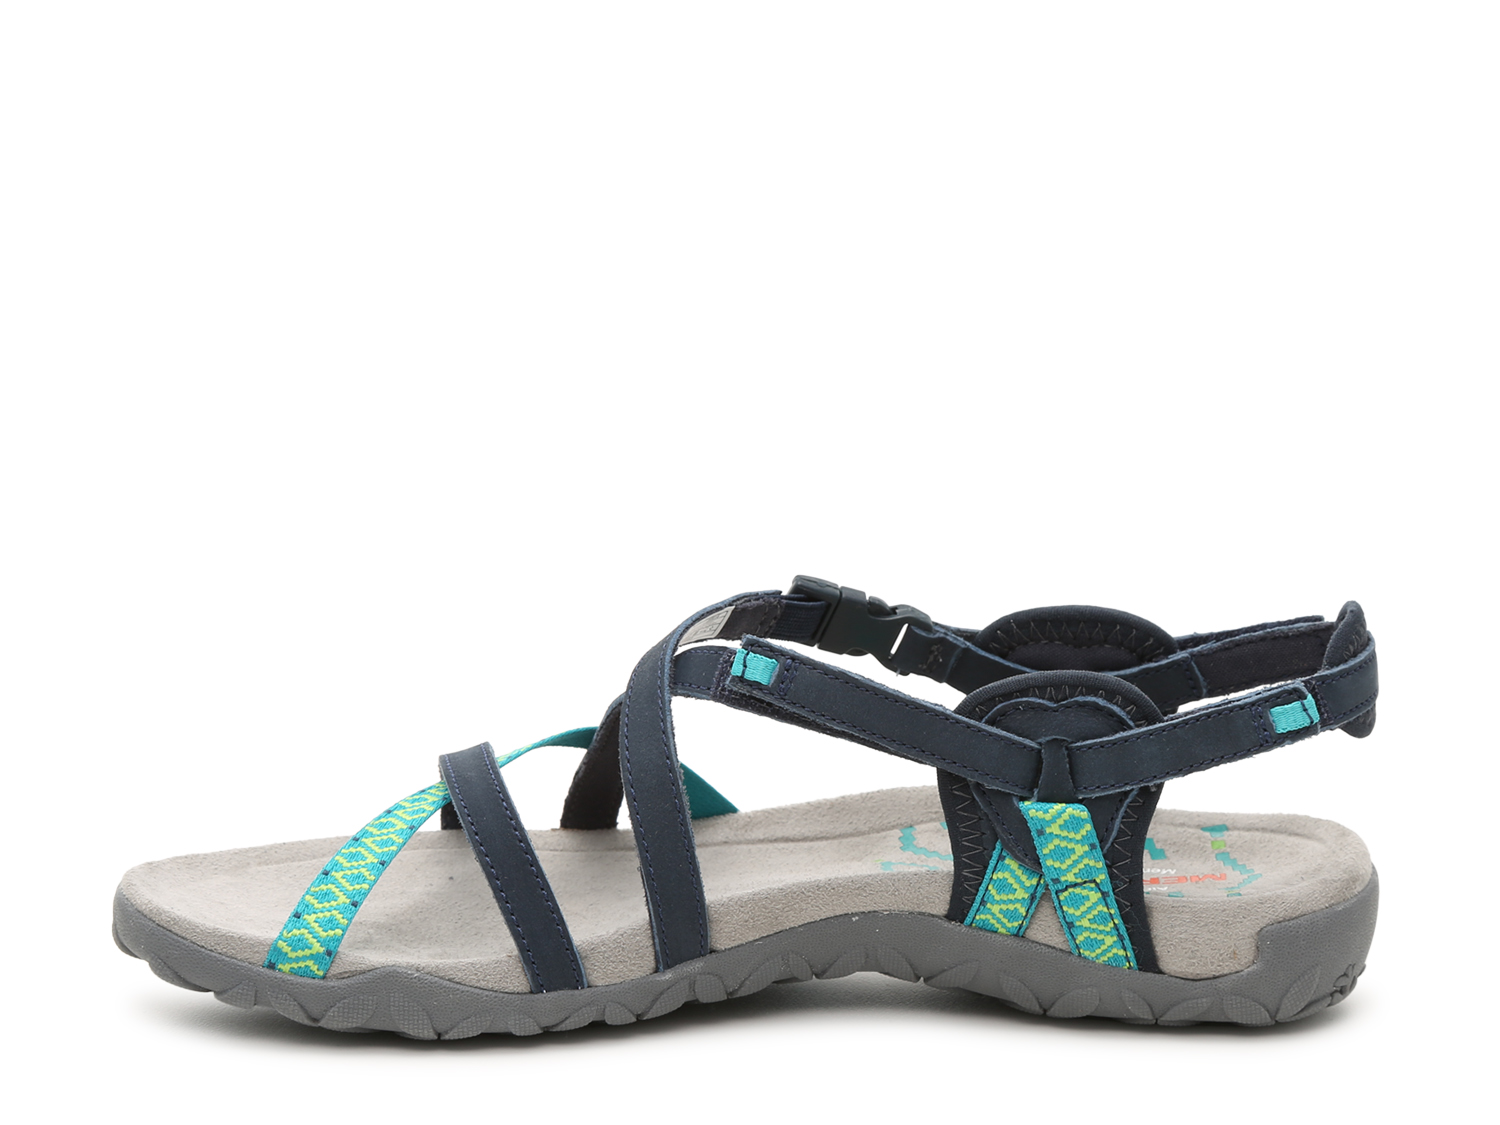 MERRELL Terran Lattice II J02766 Outdoor Casual Sport Travel Sandals Womens New